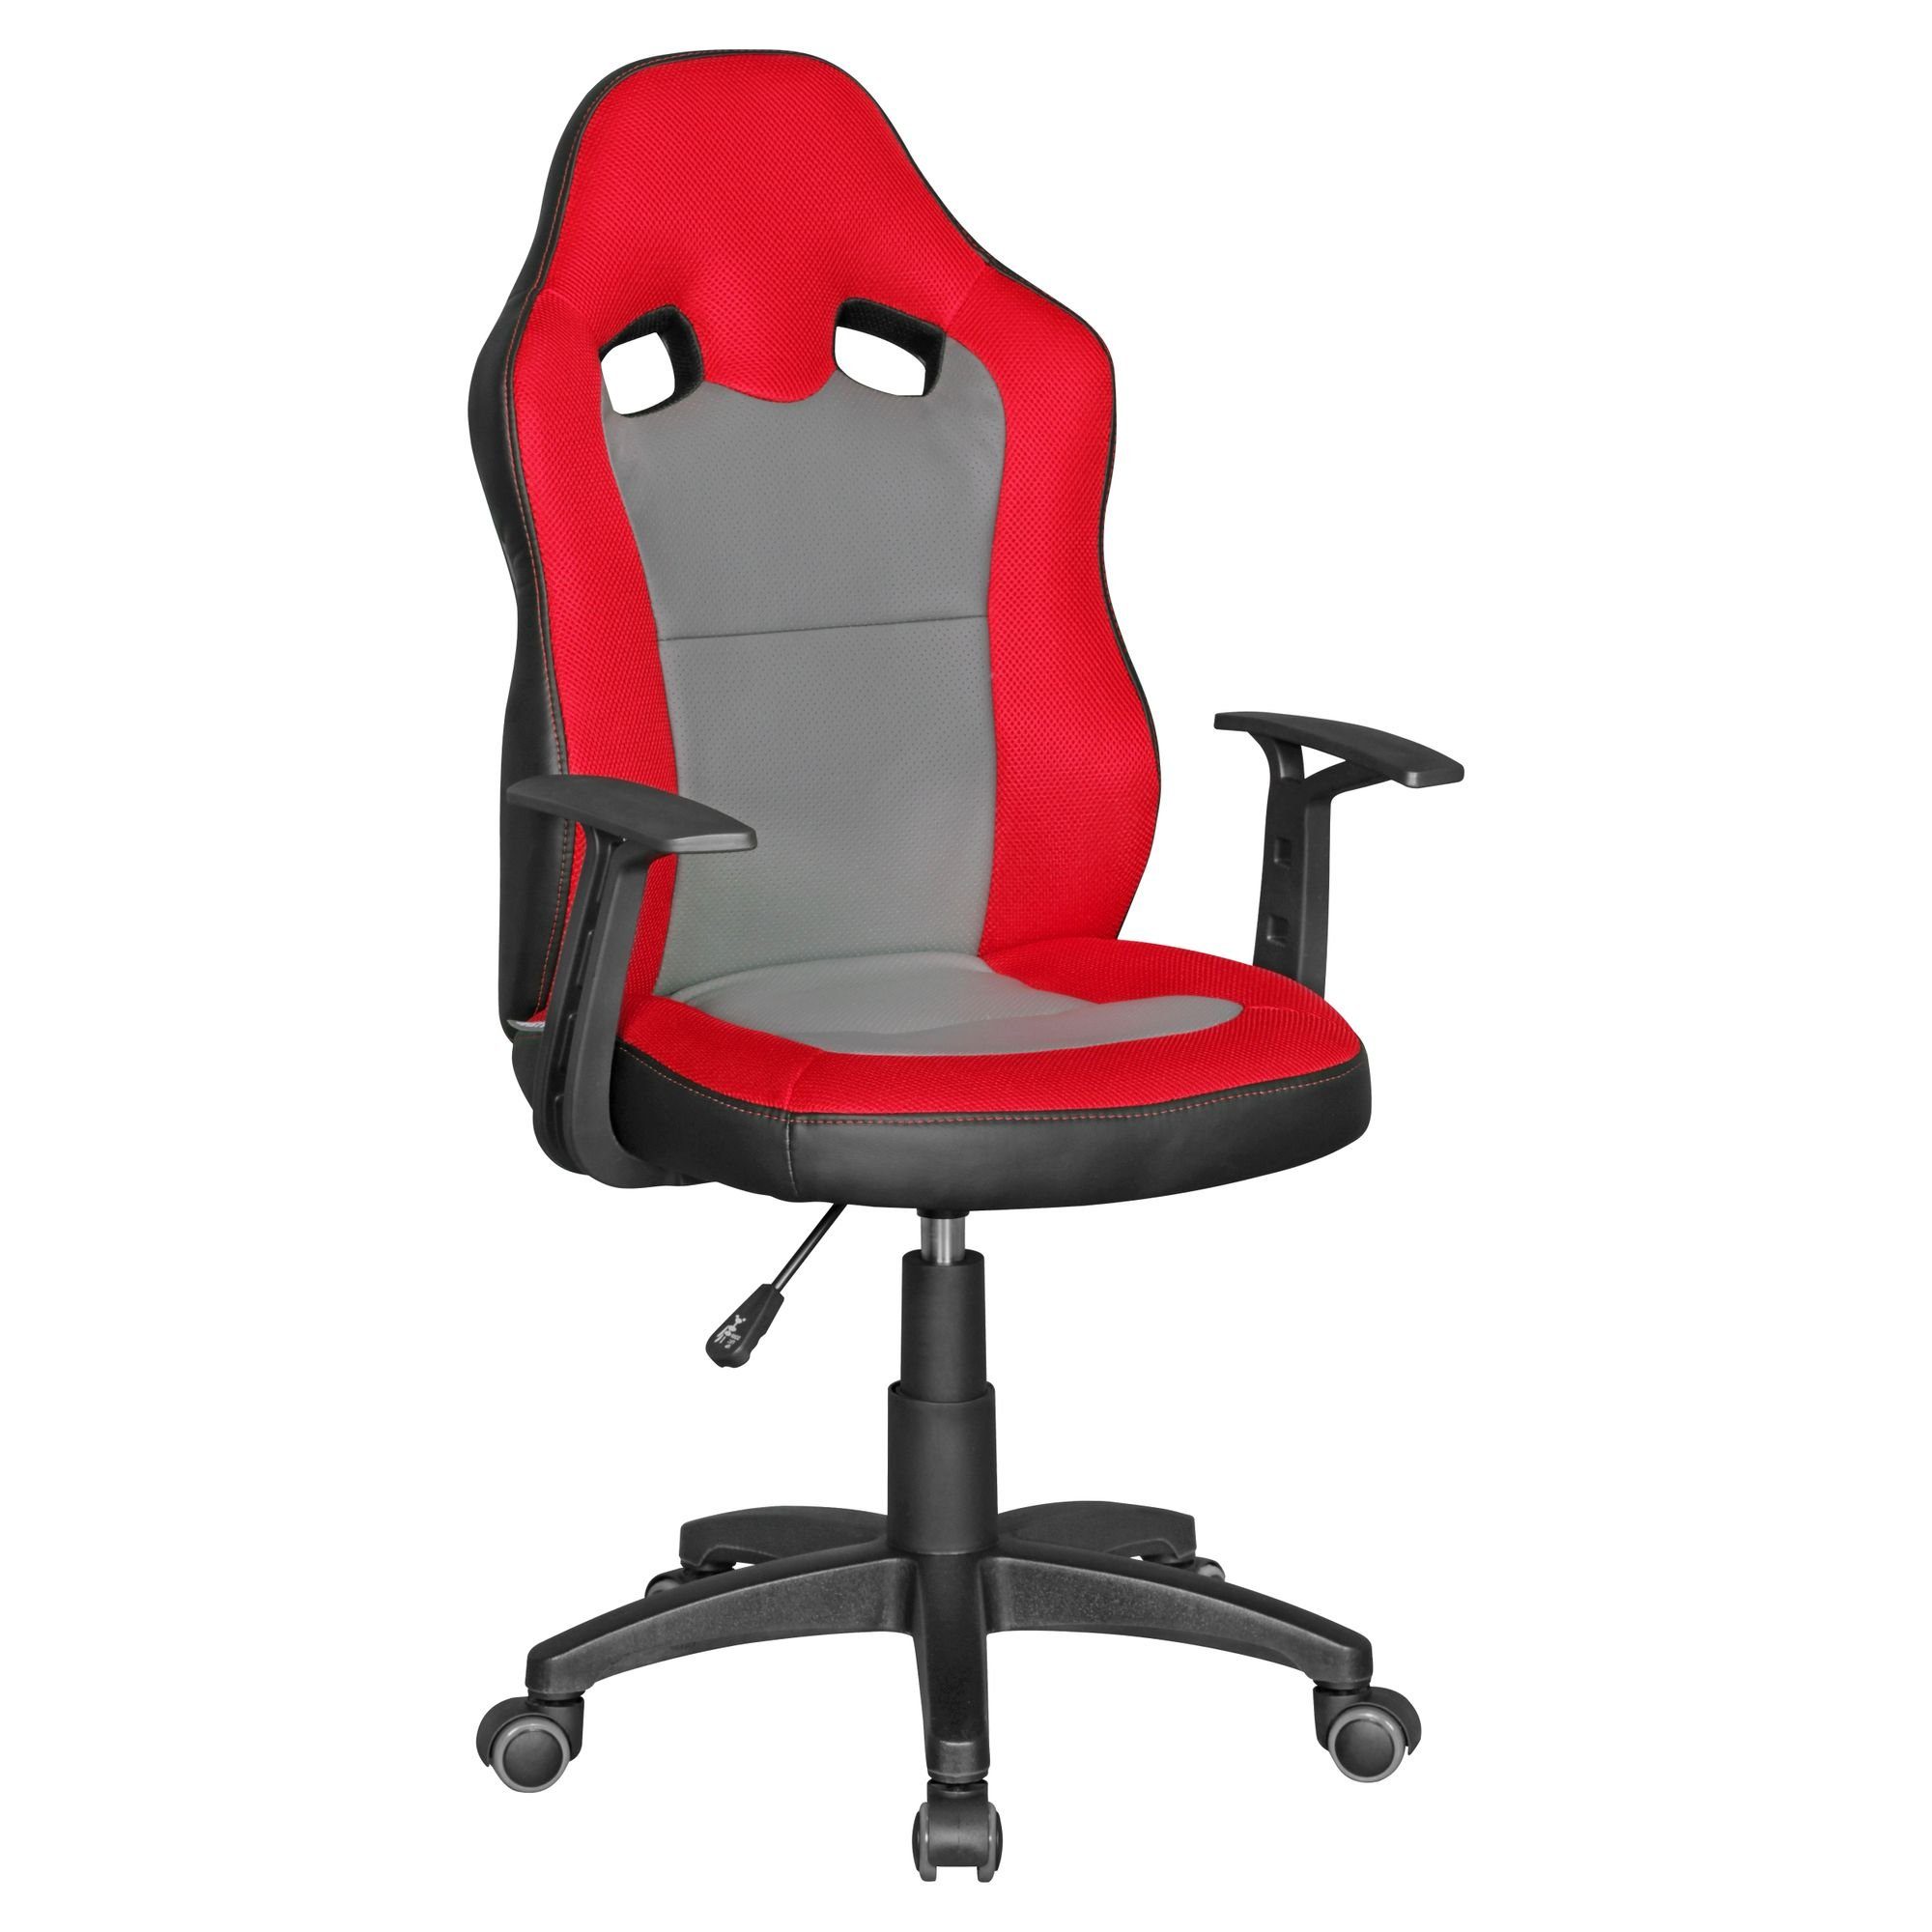 Kinder-Stuhl Kinderstuhl DESIGN Ergonomisch, höhenverstellbar, Armlehnen FAST Grau Rot, KADIMA mit Rot - |